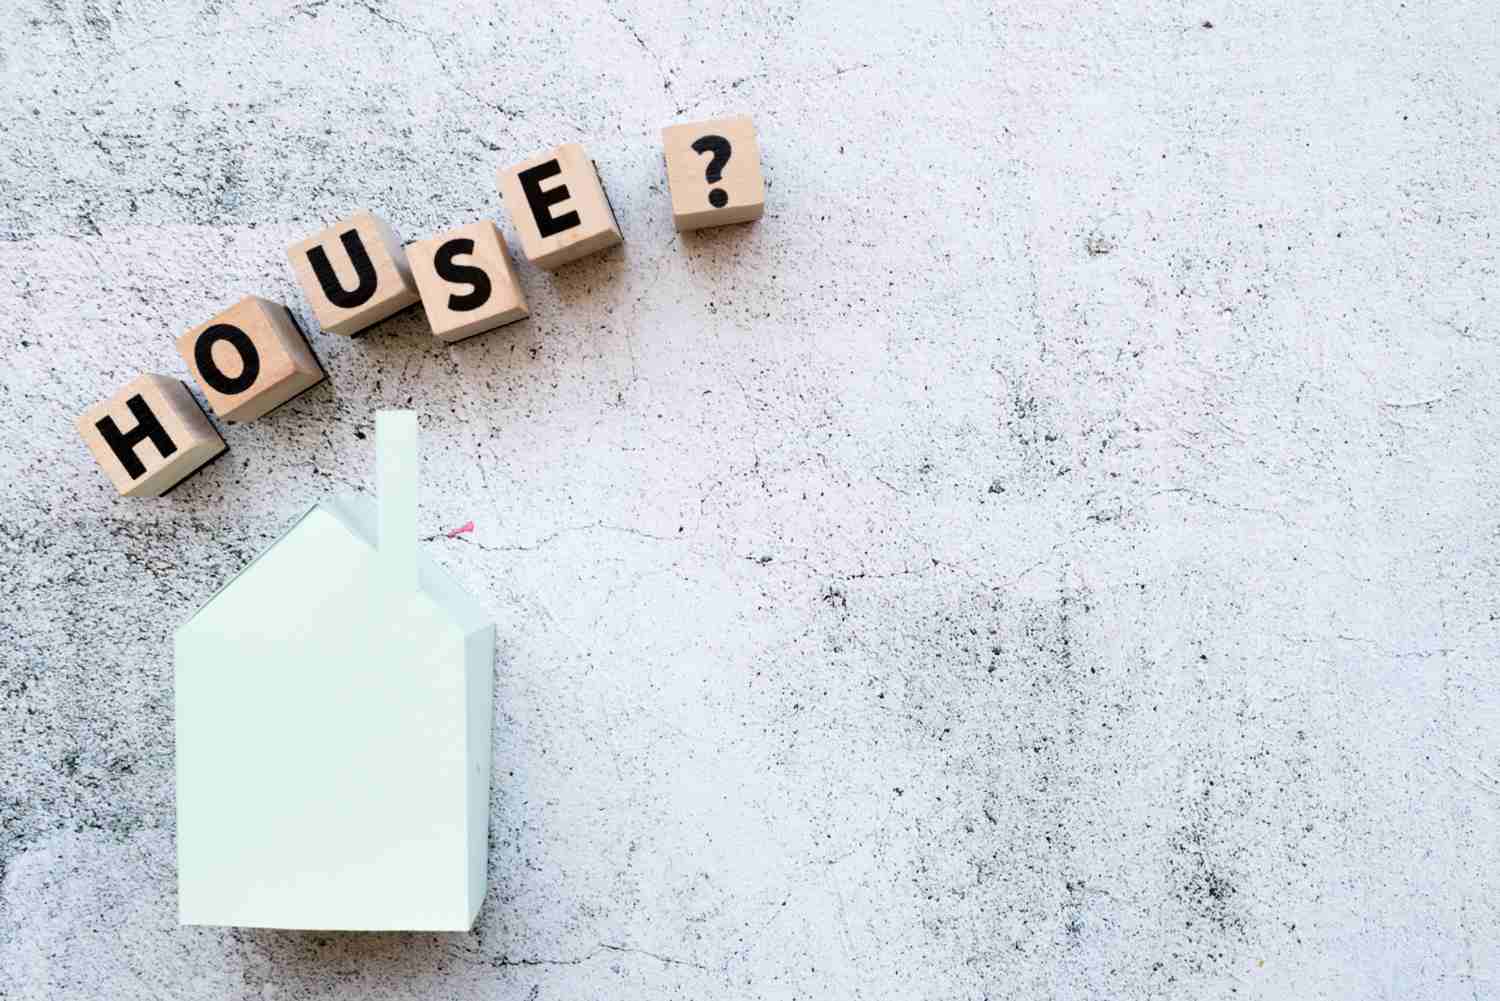 Buy House vs Build House